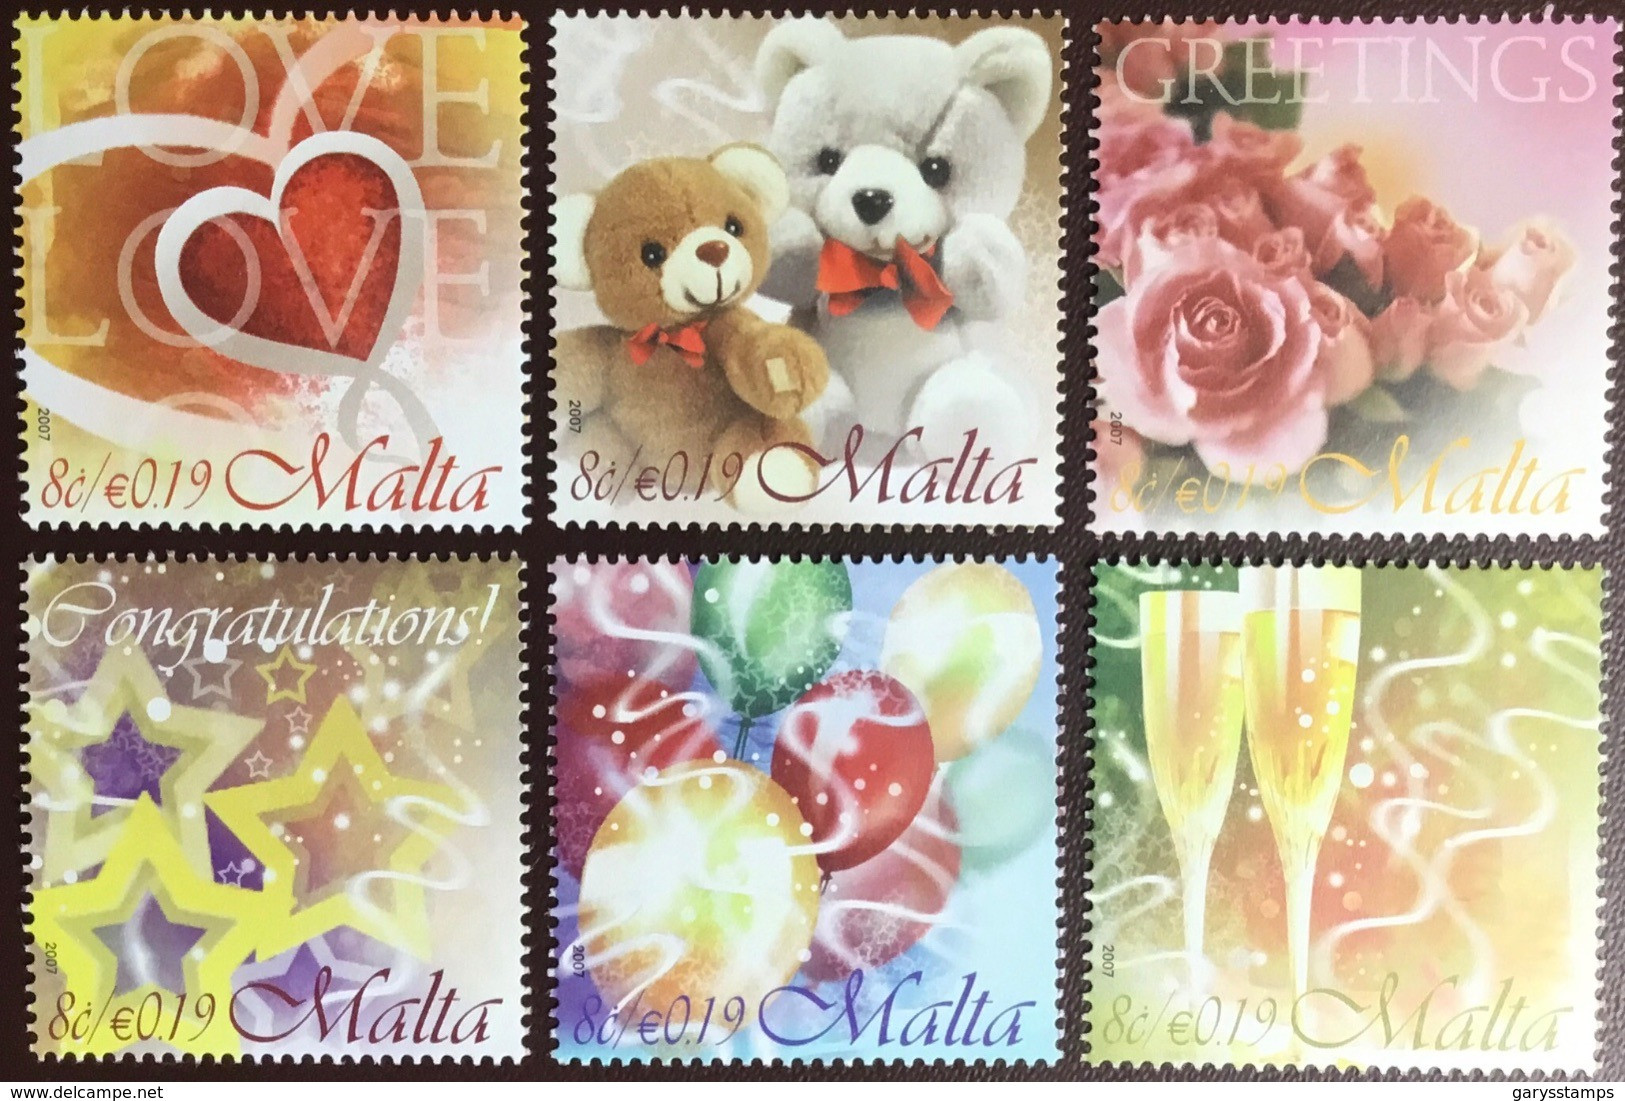 Malta 2007 Greetings Stamps MNH - Malta